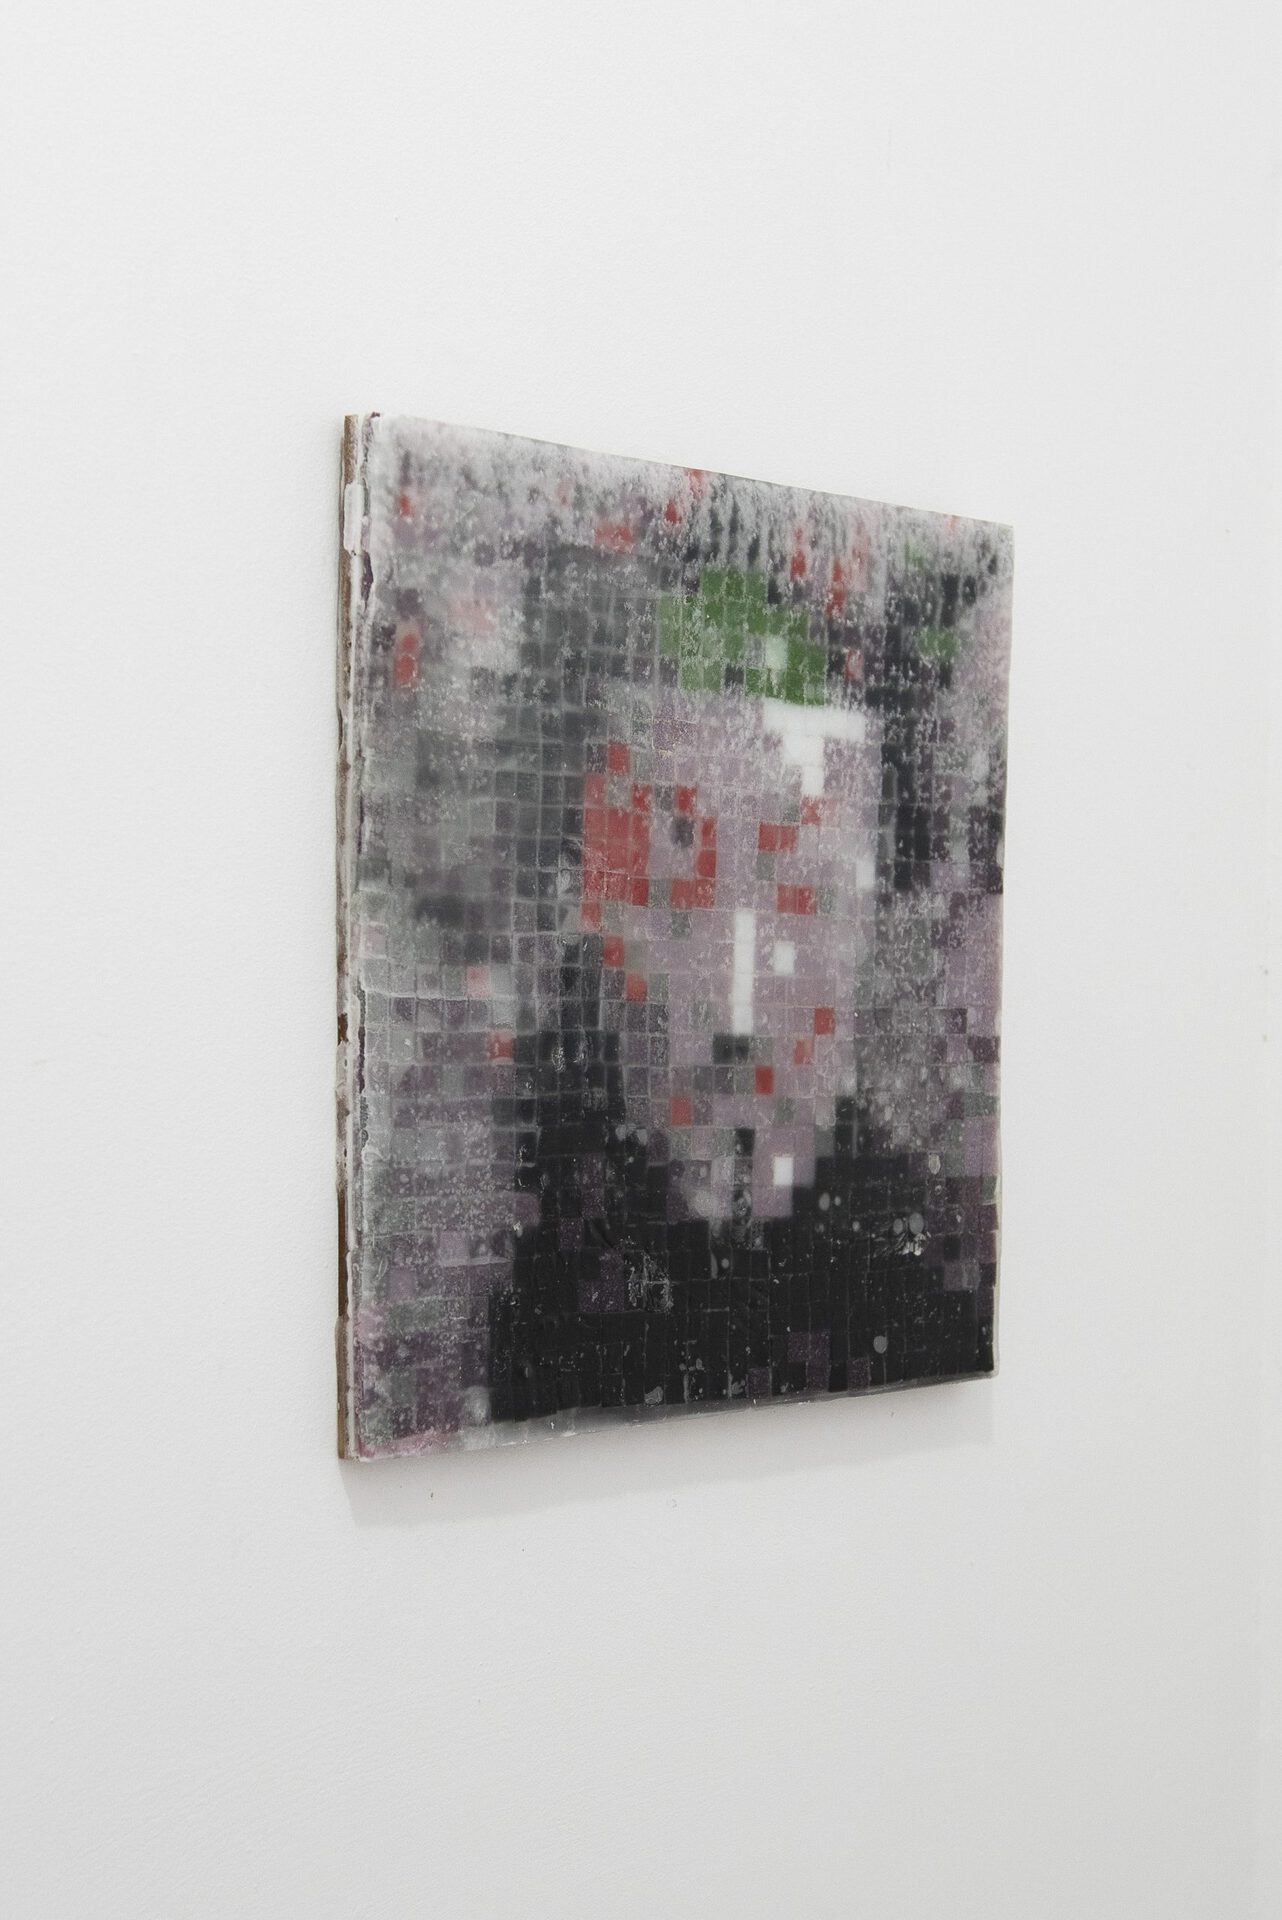 Jordan Halsall and Bronte Stolz, Anon, 2020. Glass, paraffin wax. 30 x 30 x 1 cm